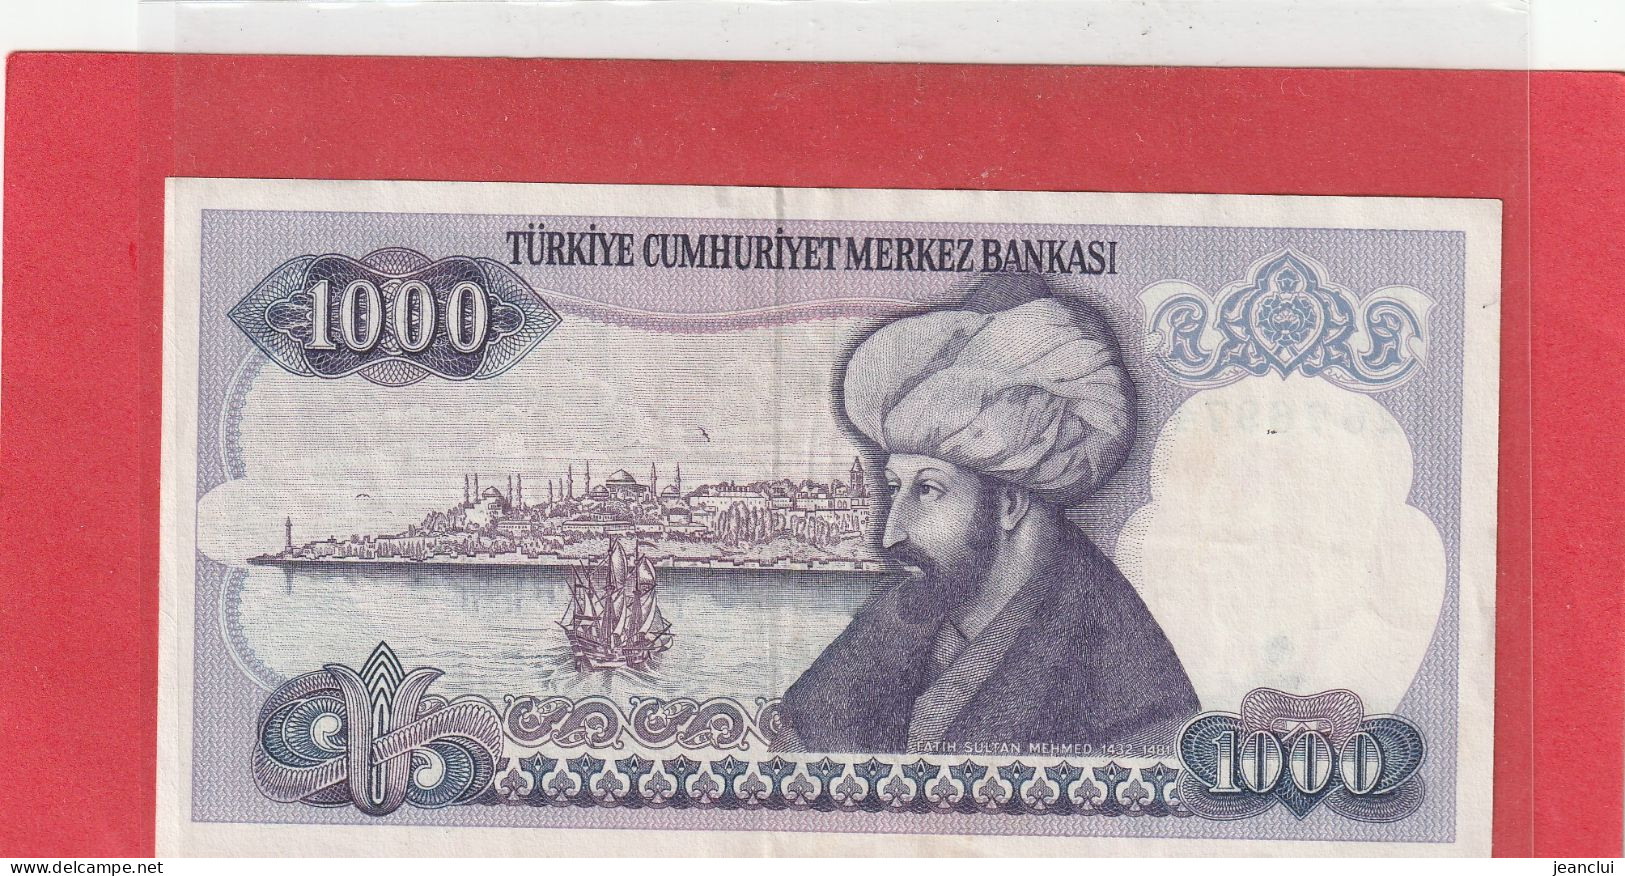 TURKIYE CUMHURIYET MERKEZ BANKASI . 1.000 LIRA . 14 OCAK 1970  . N°  A26 769745 .  2 SCANNES  .  BILLET USITE - Turchia